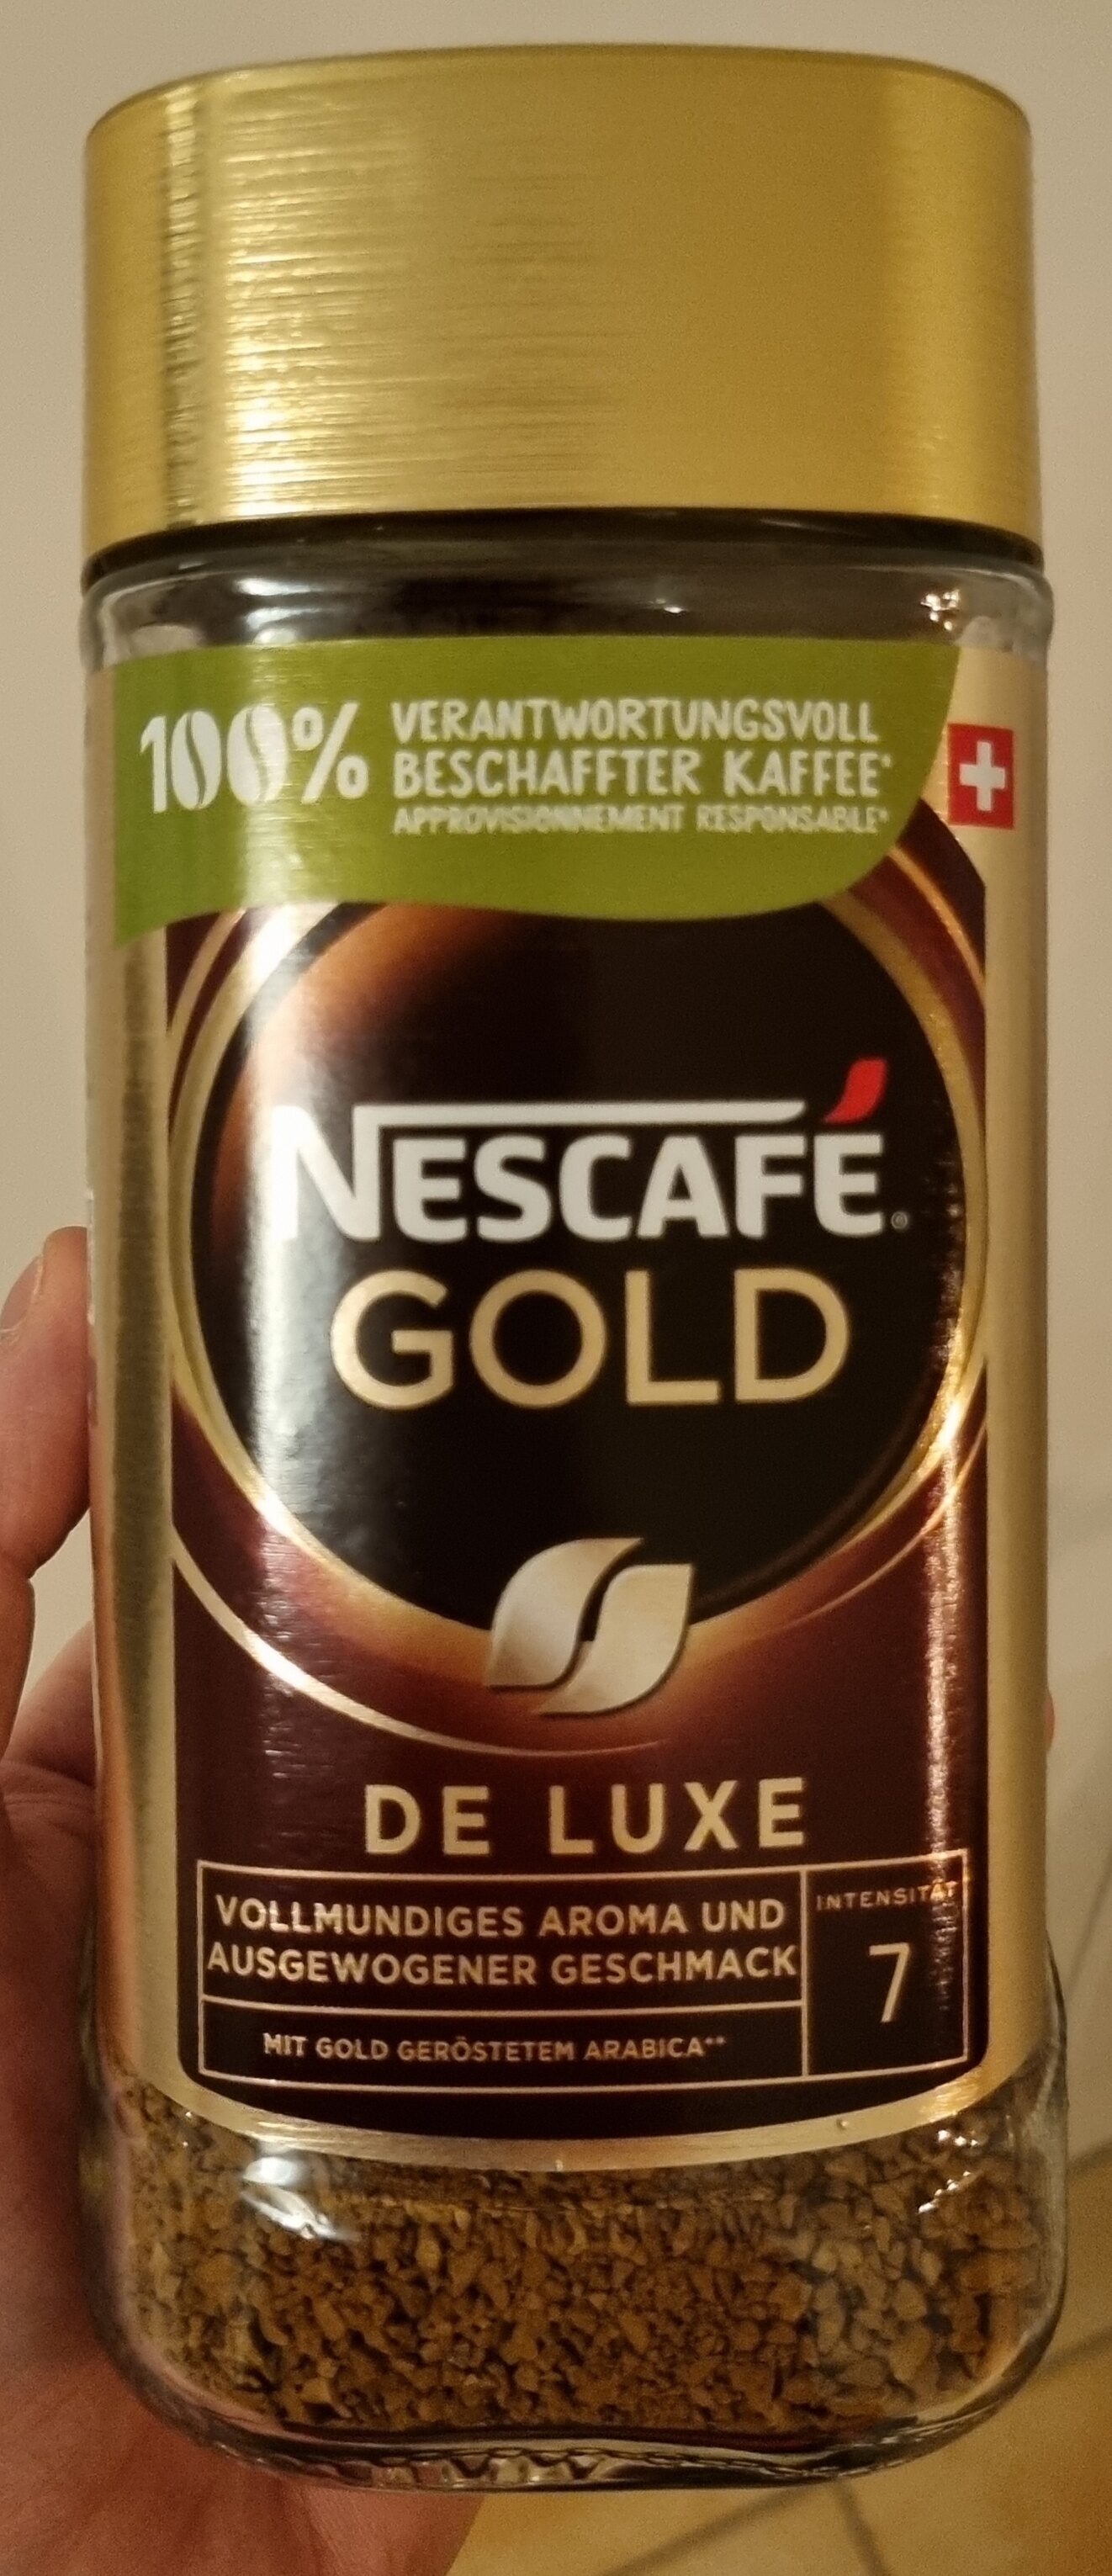 Nescafé gold de luxe - Produkt